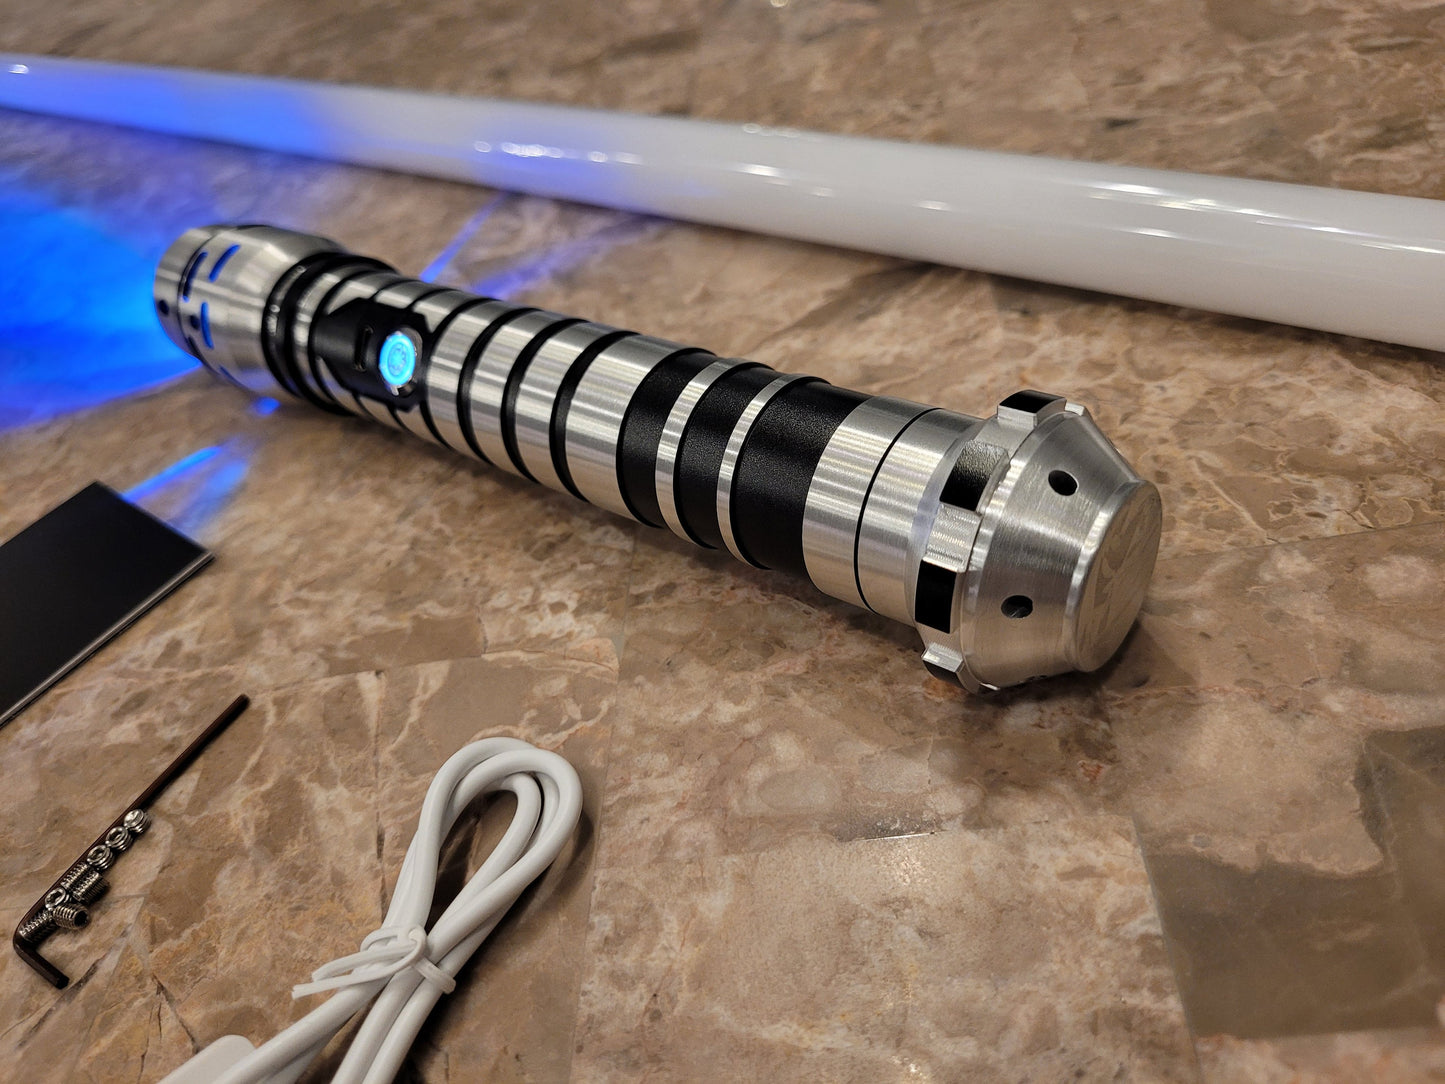 Color Changing Lightsaber with Sound – "IG Assassin Saber" Extremely Durable, Aluminum Hilt, Rounded Shaped Emitter, RGB, Star Wars Bossaber